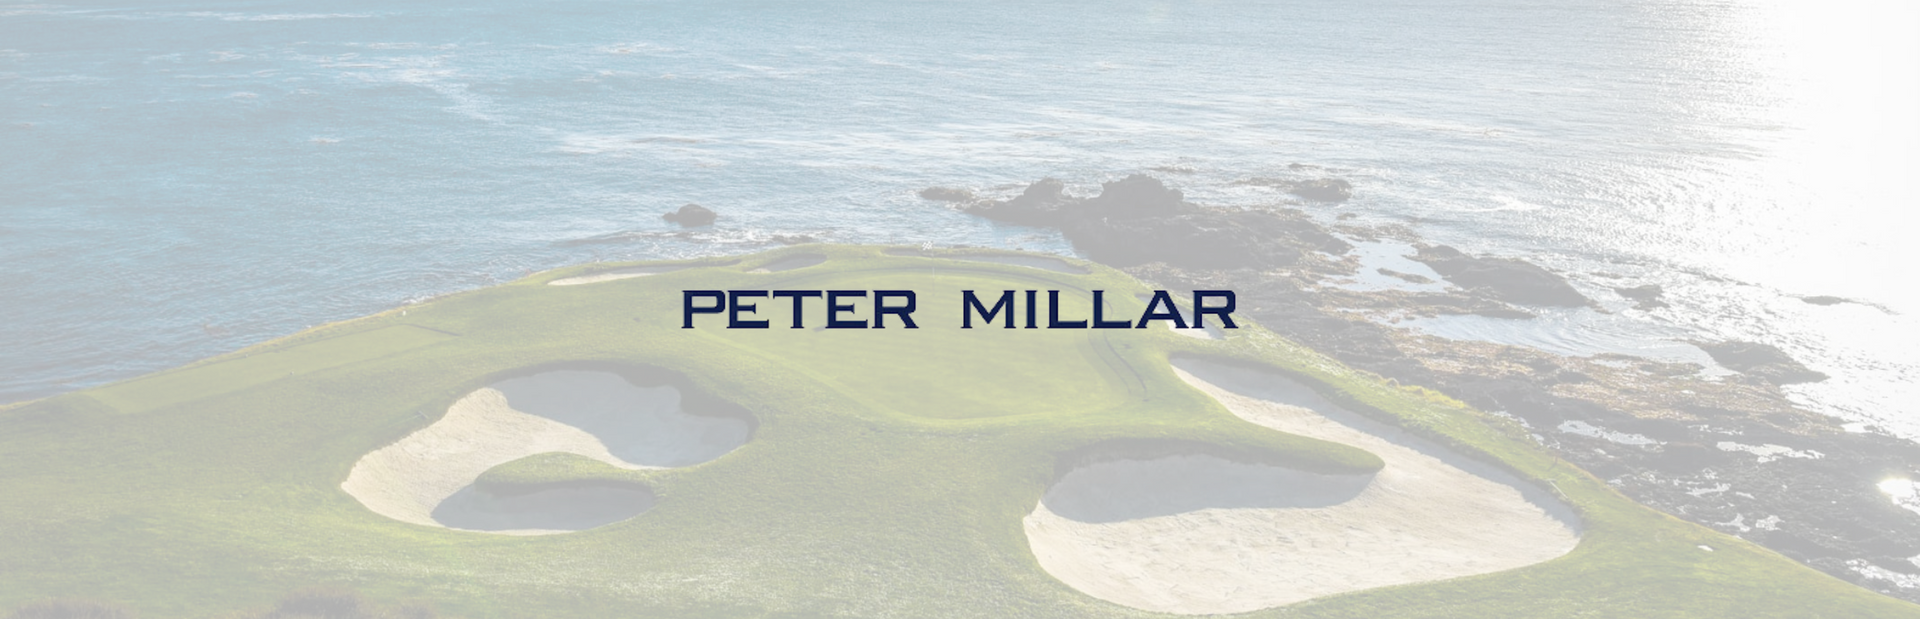 PETER MILLAR GOLF